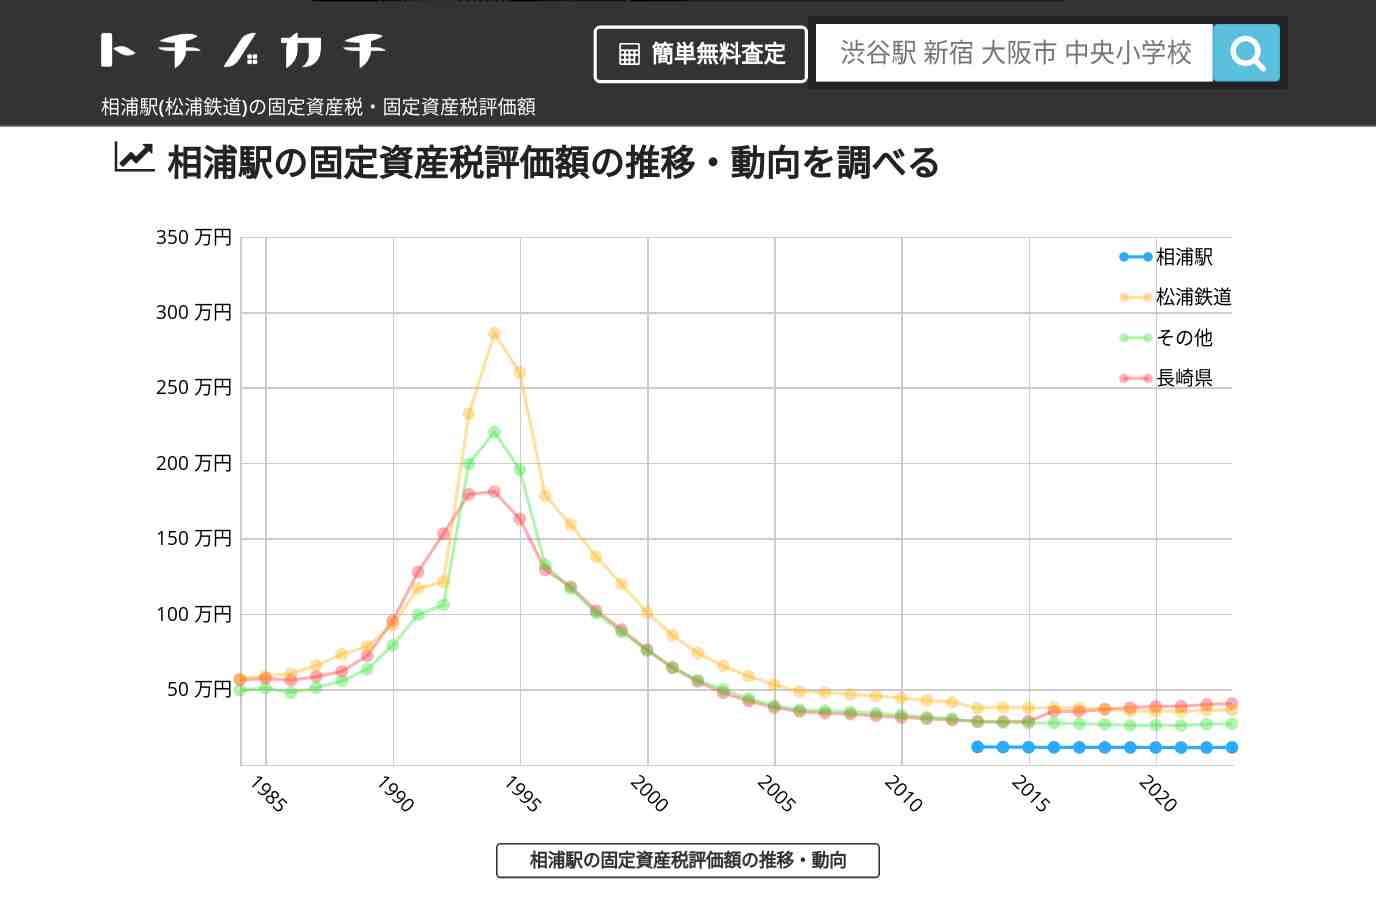 相浦駅(松浦鉄道)の固定資産税・固定資産税評価額 | トチノカチ